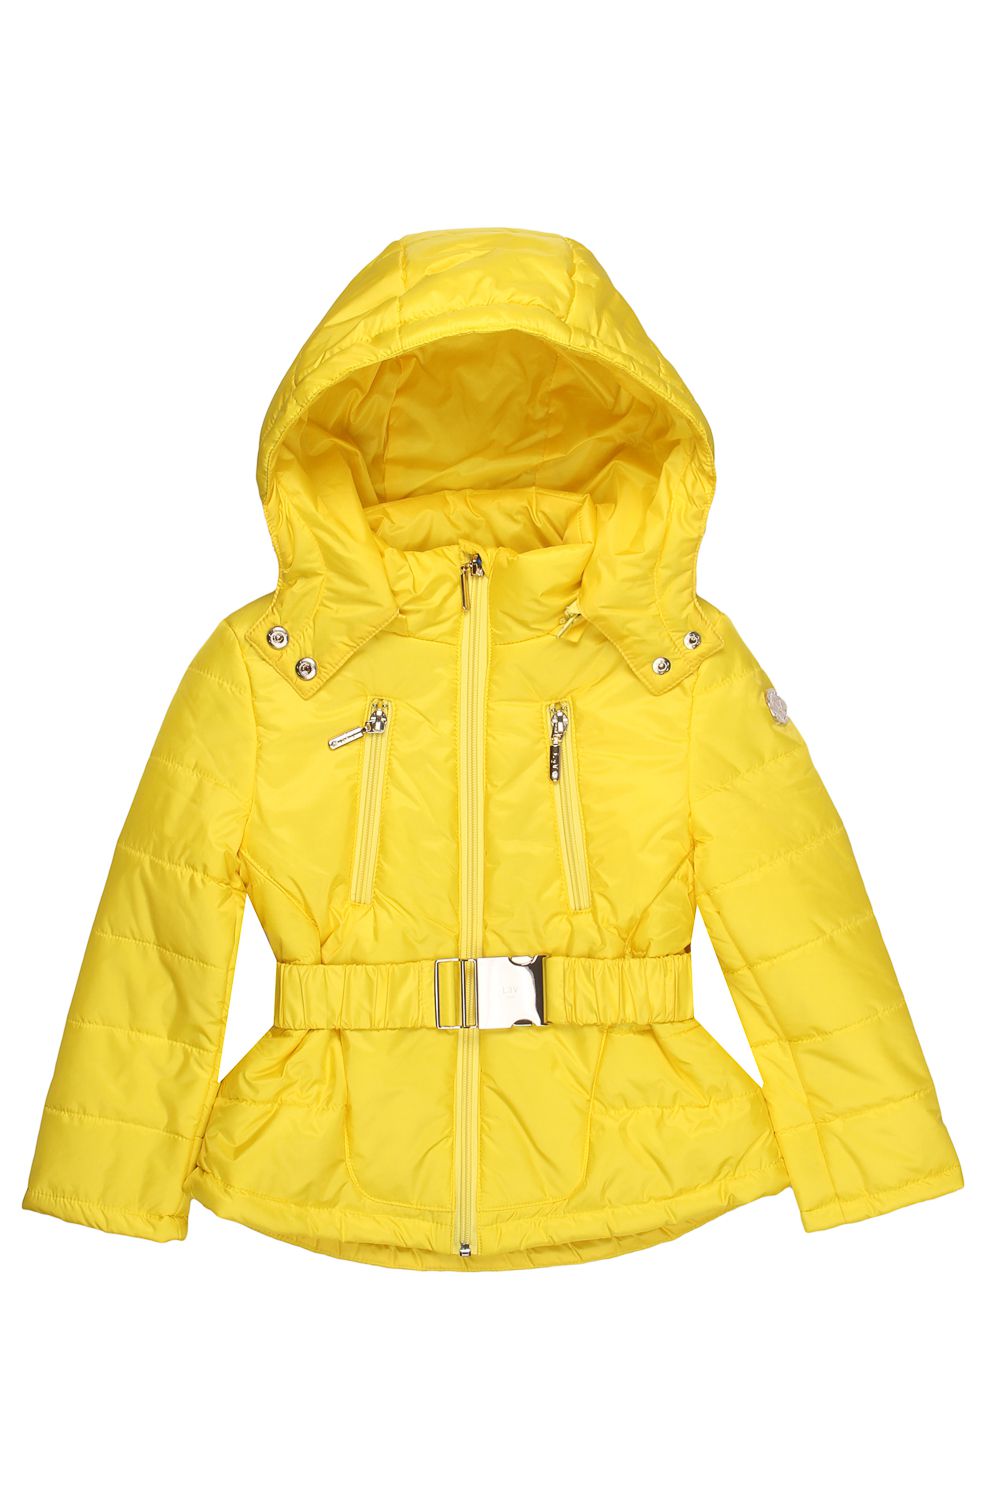 Куртка Les Trois Vallees, размер 98, цвет желтый 10A3910 - фото 1